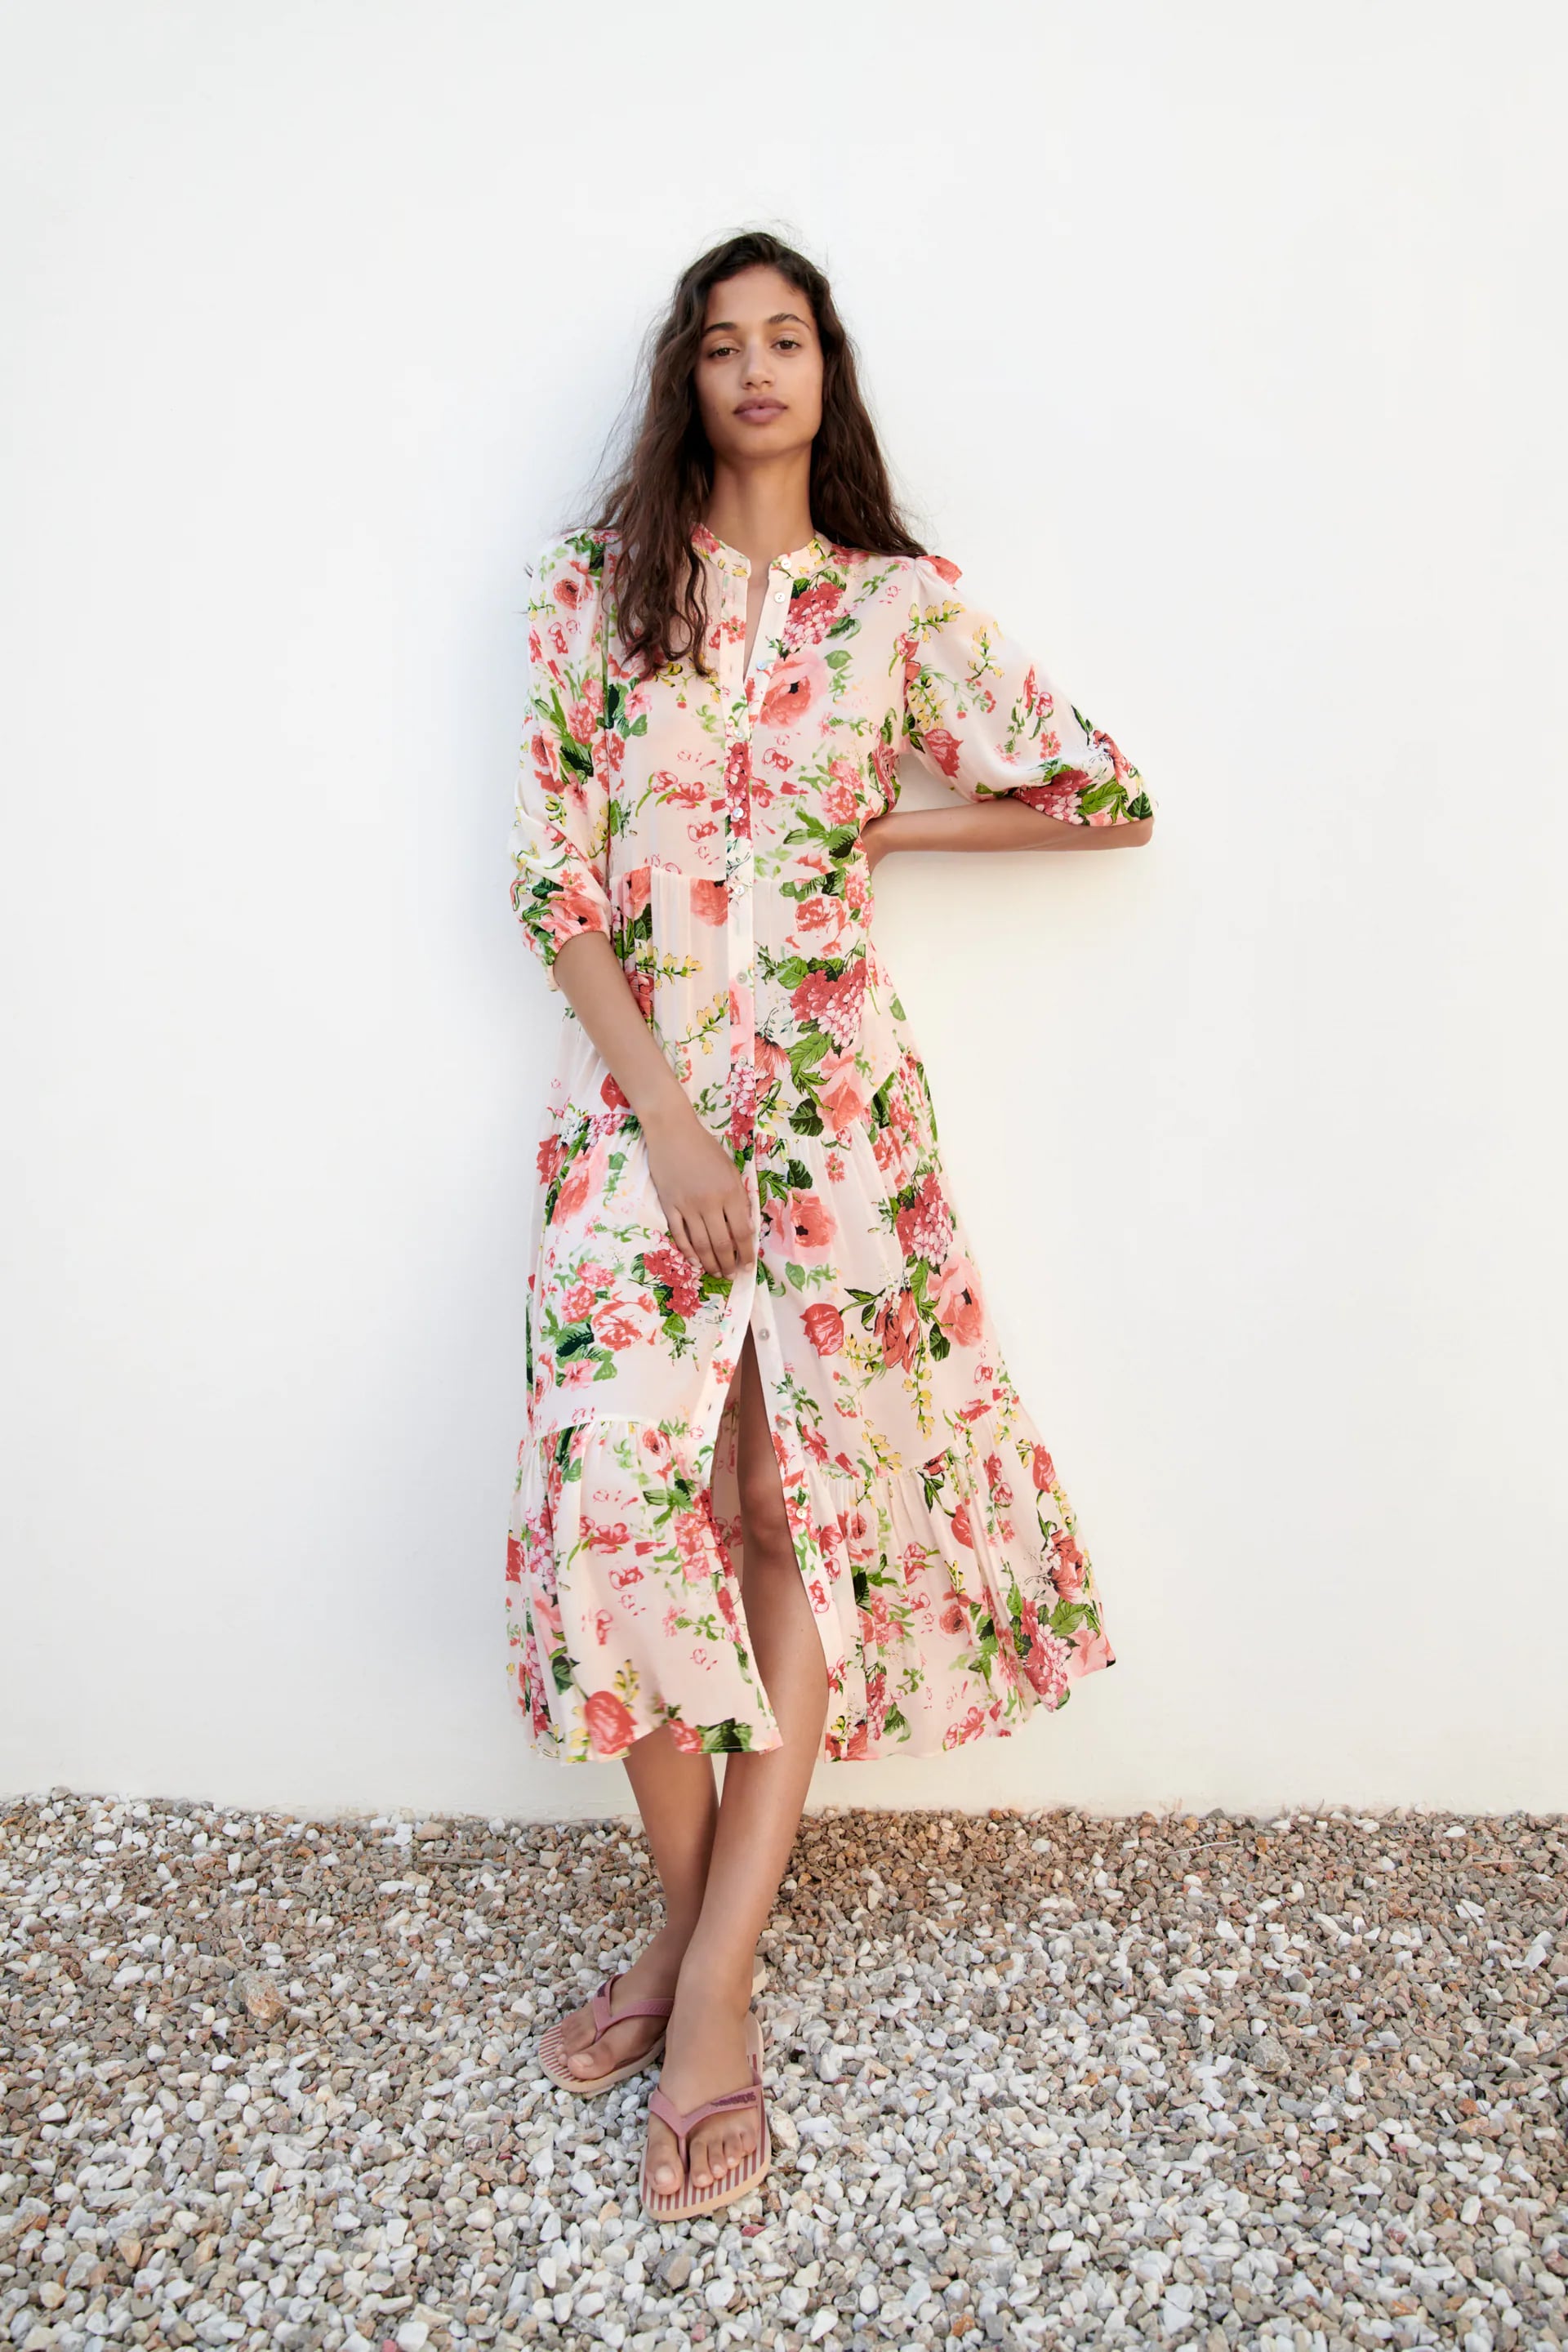 A Statement Dress: Zara Floral Print ...